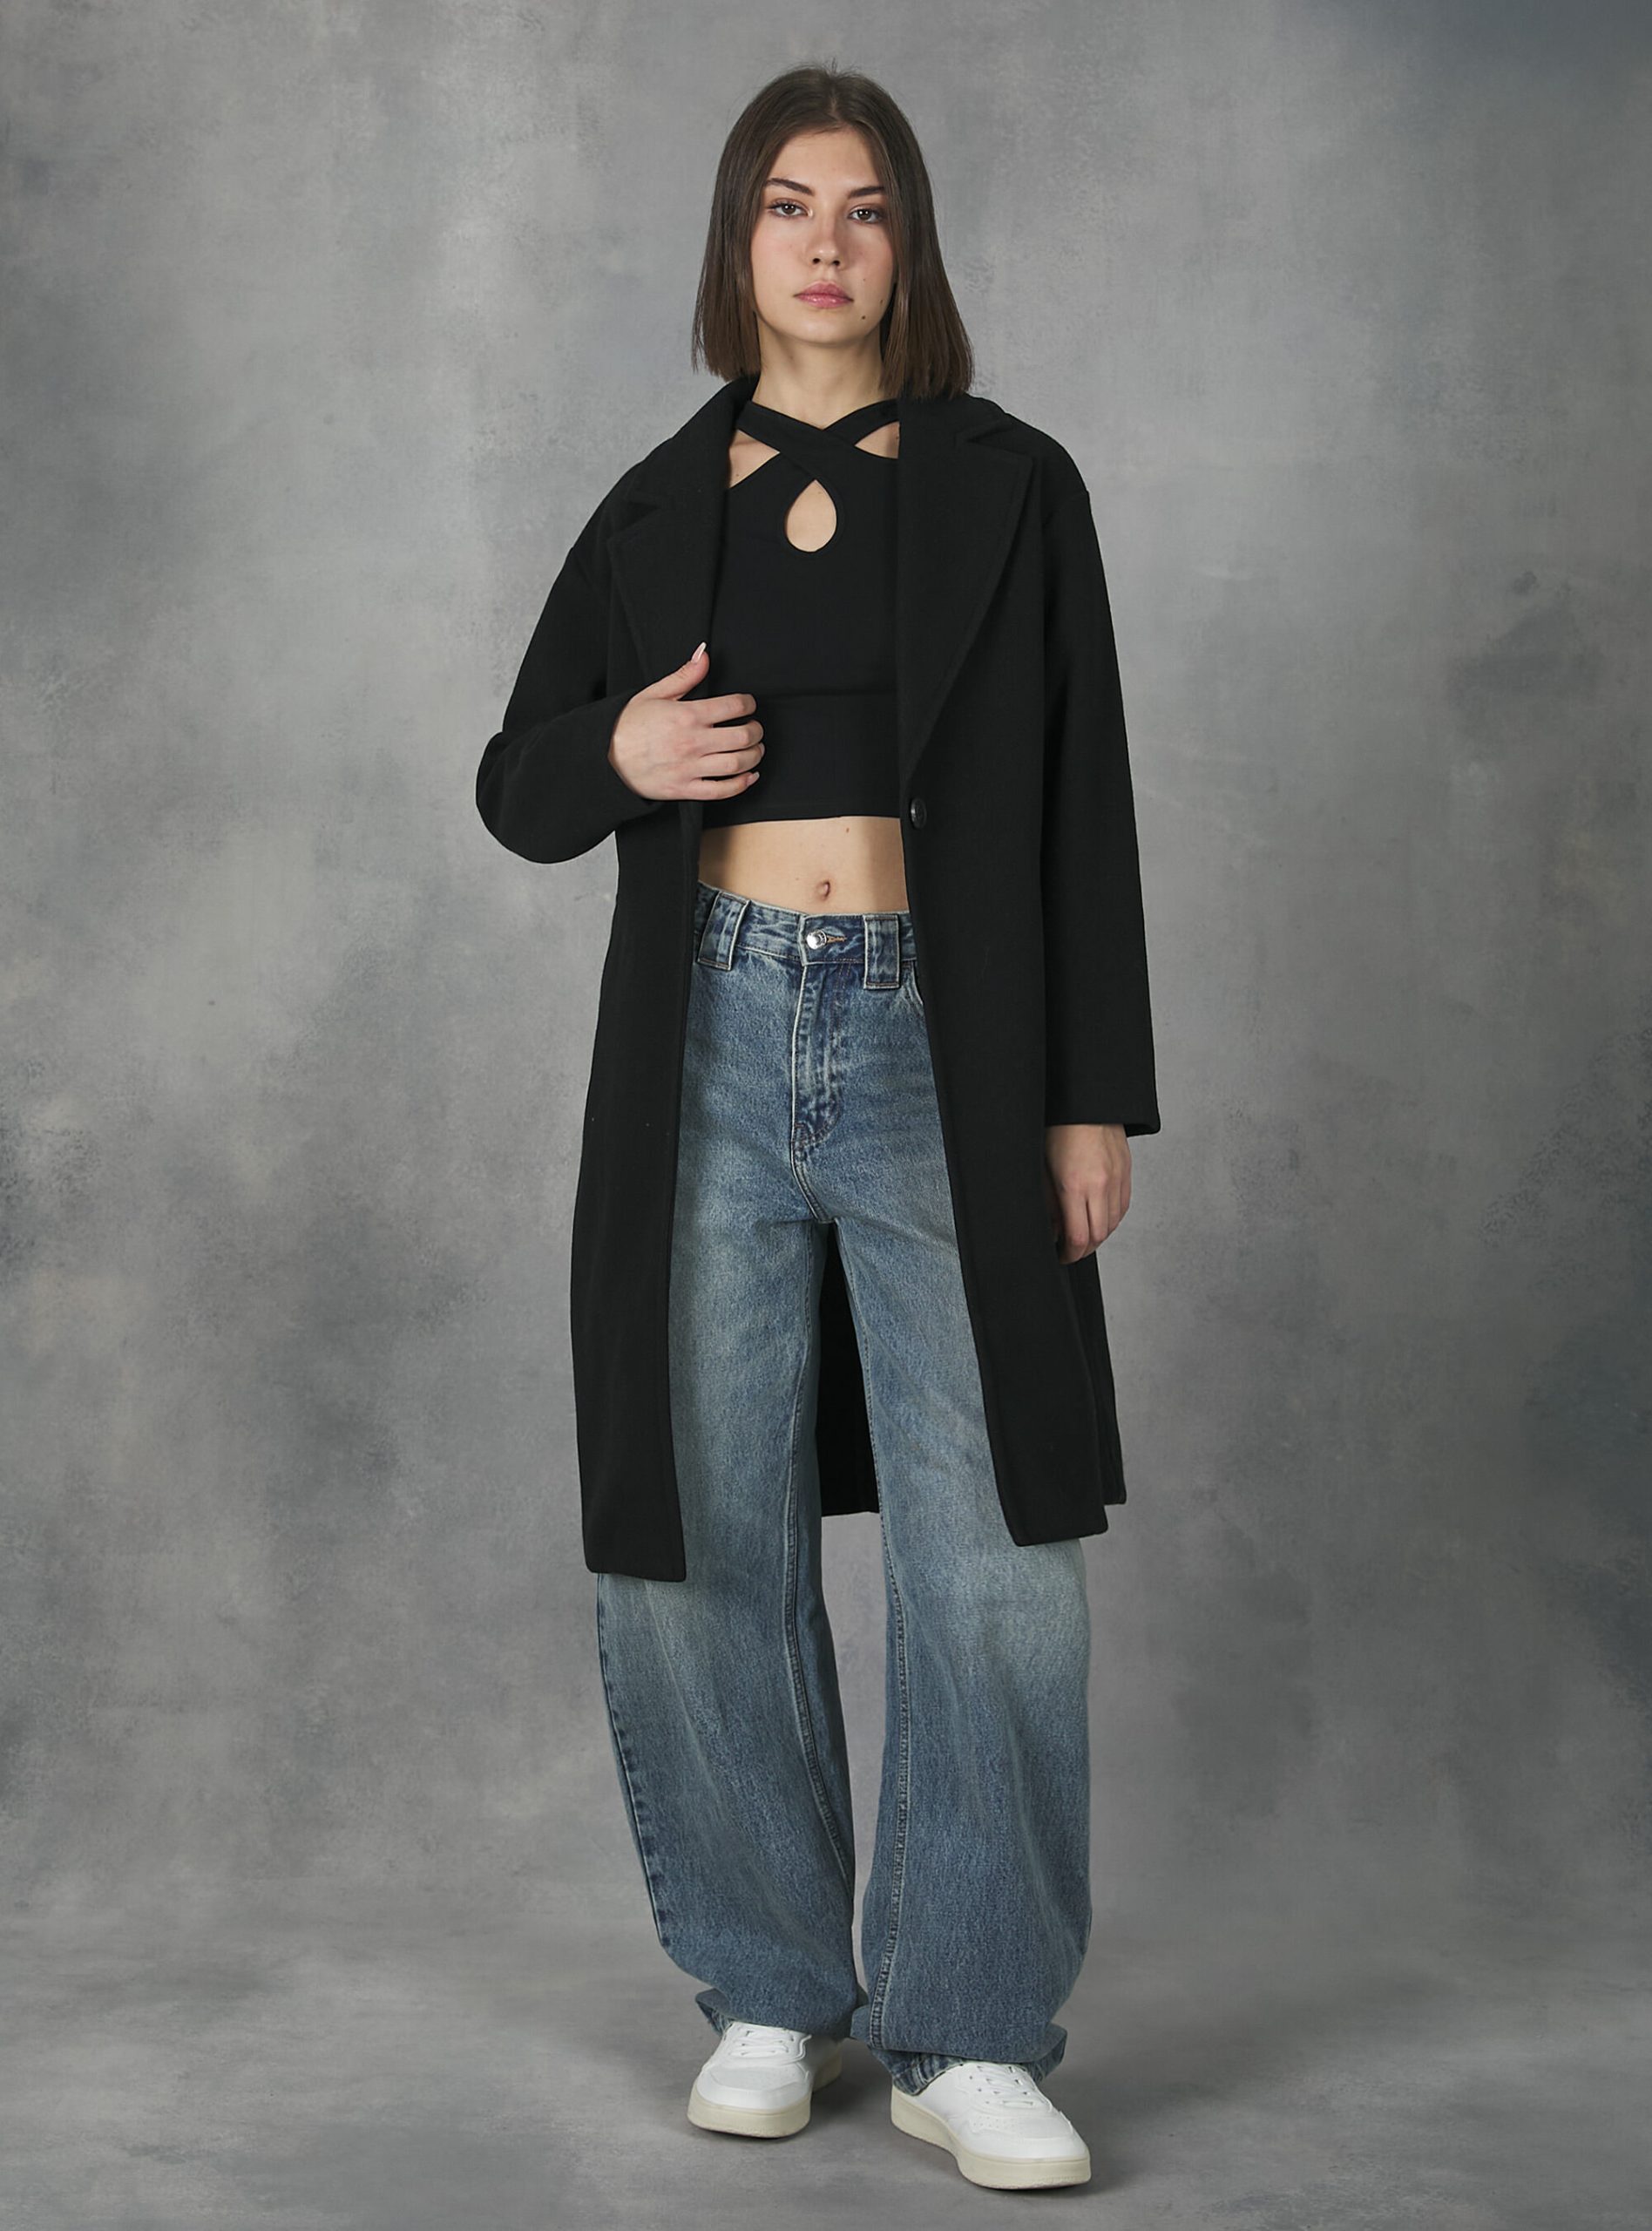 Mäntel Und Jacken Günstig Bk1 Black Plain-Coloured Gauze Knit Coat Alcott Frauen – 2